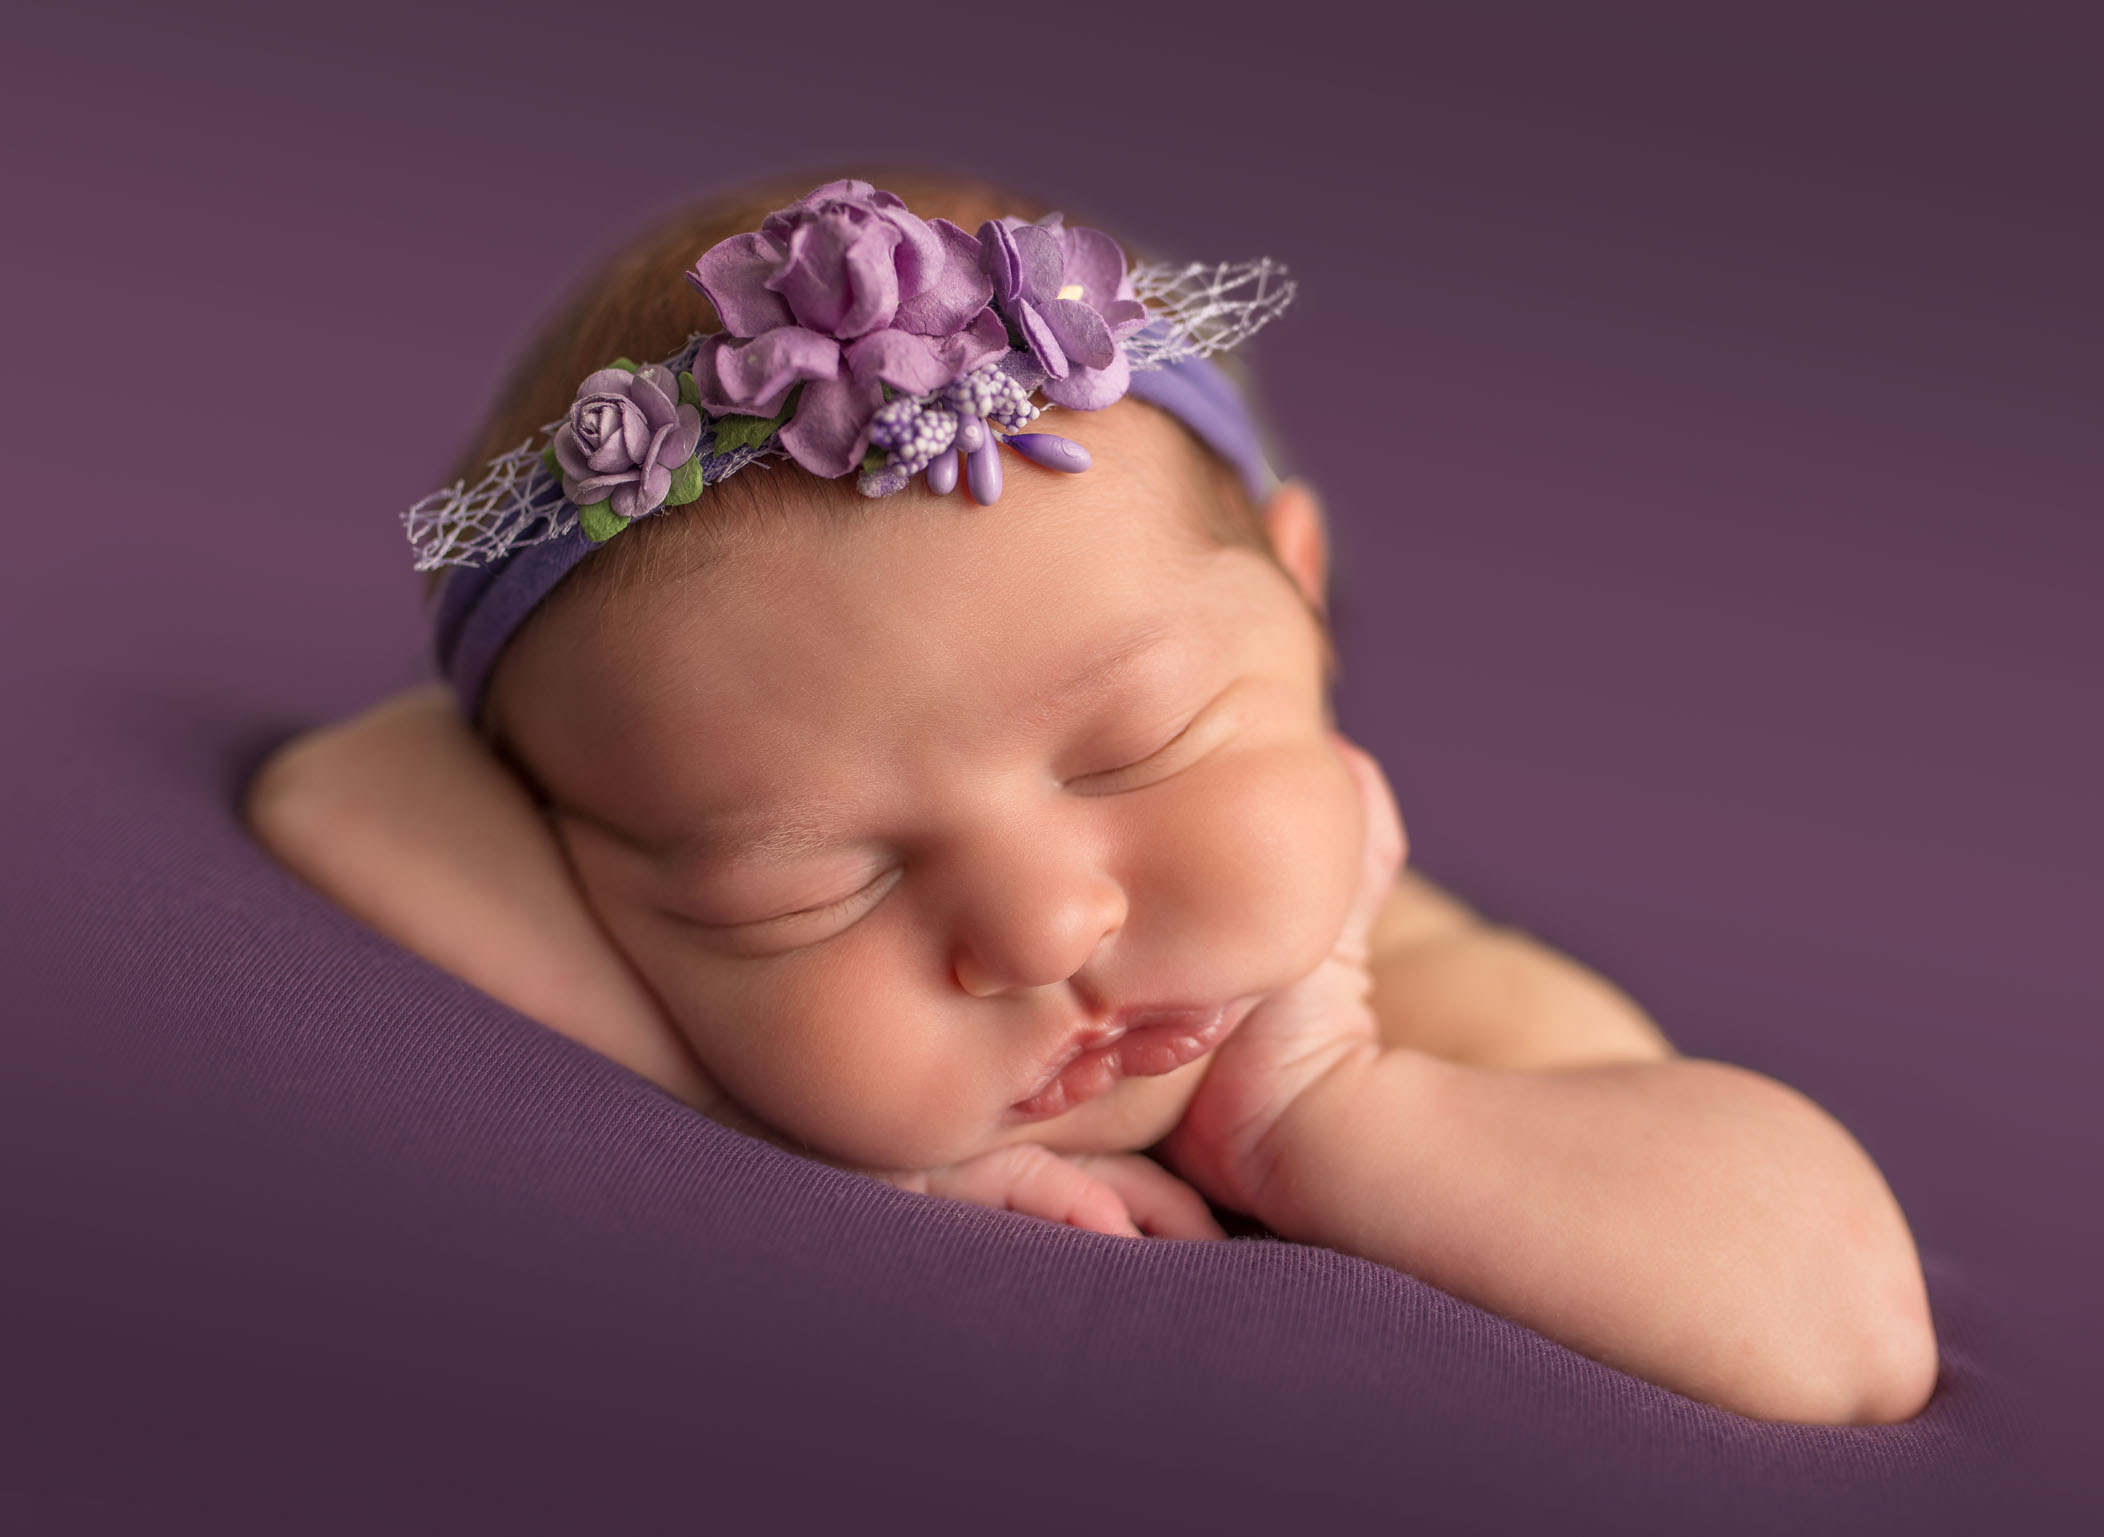 newborn baby girl sleeping with hand on cheek and purple floral headband